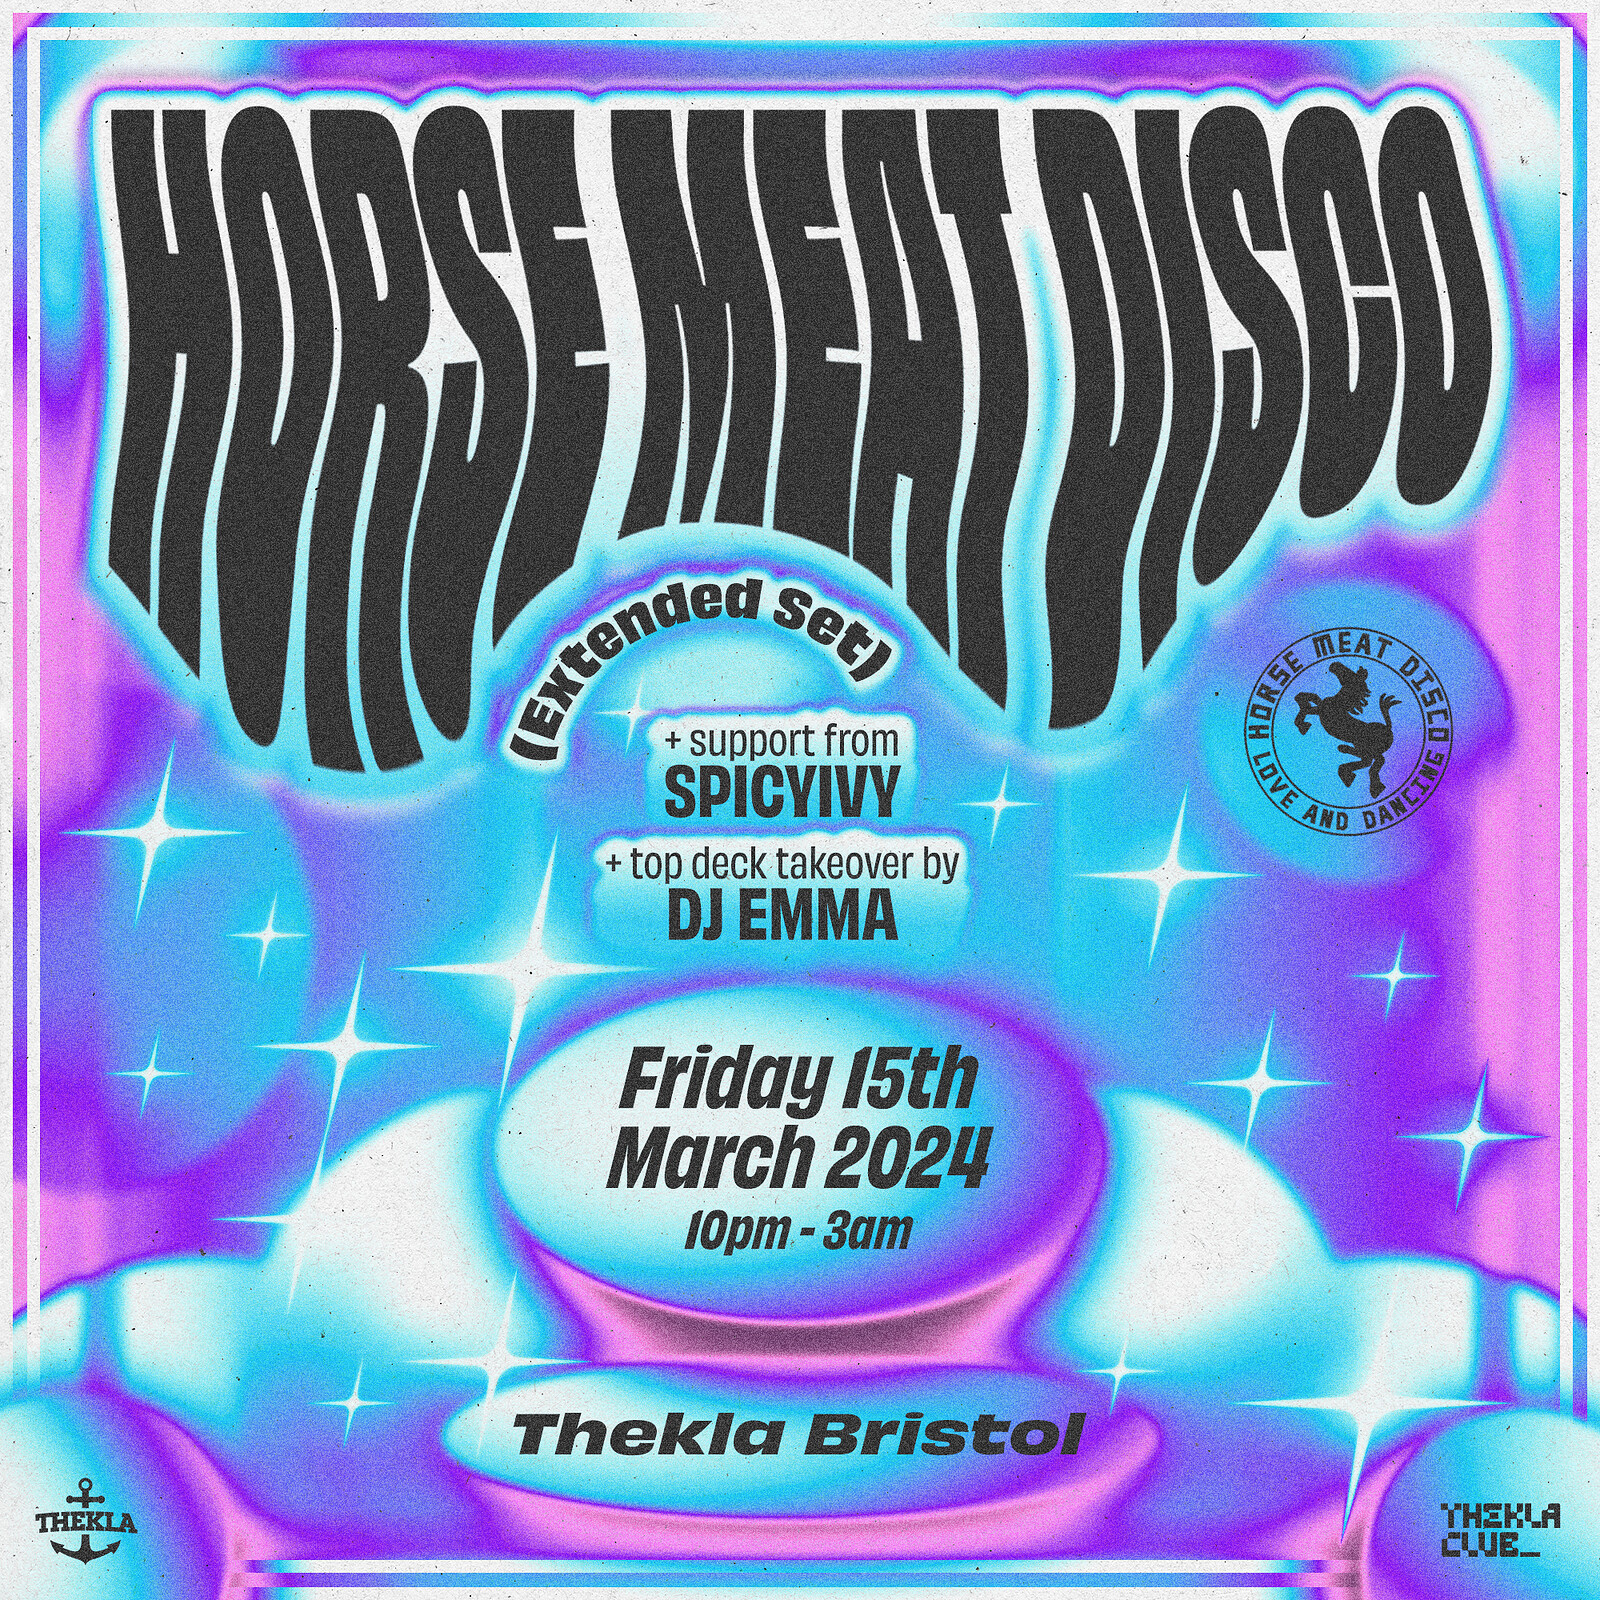 Thekla Presents Horse Meat Disco at Thekla